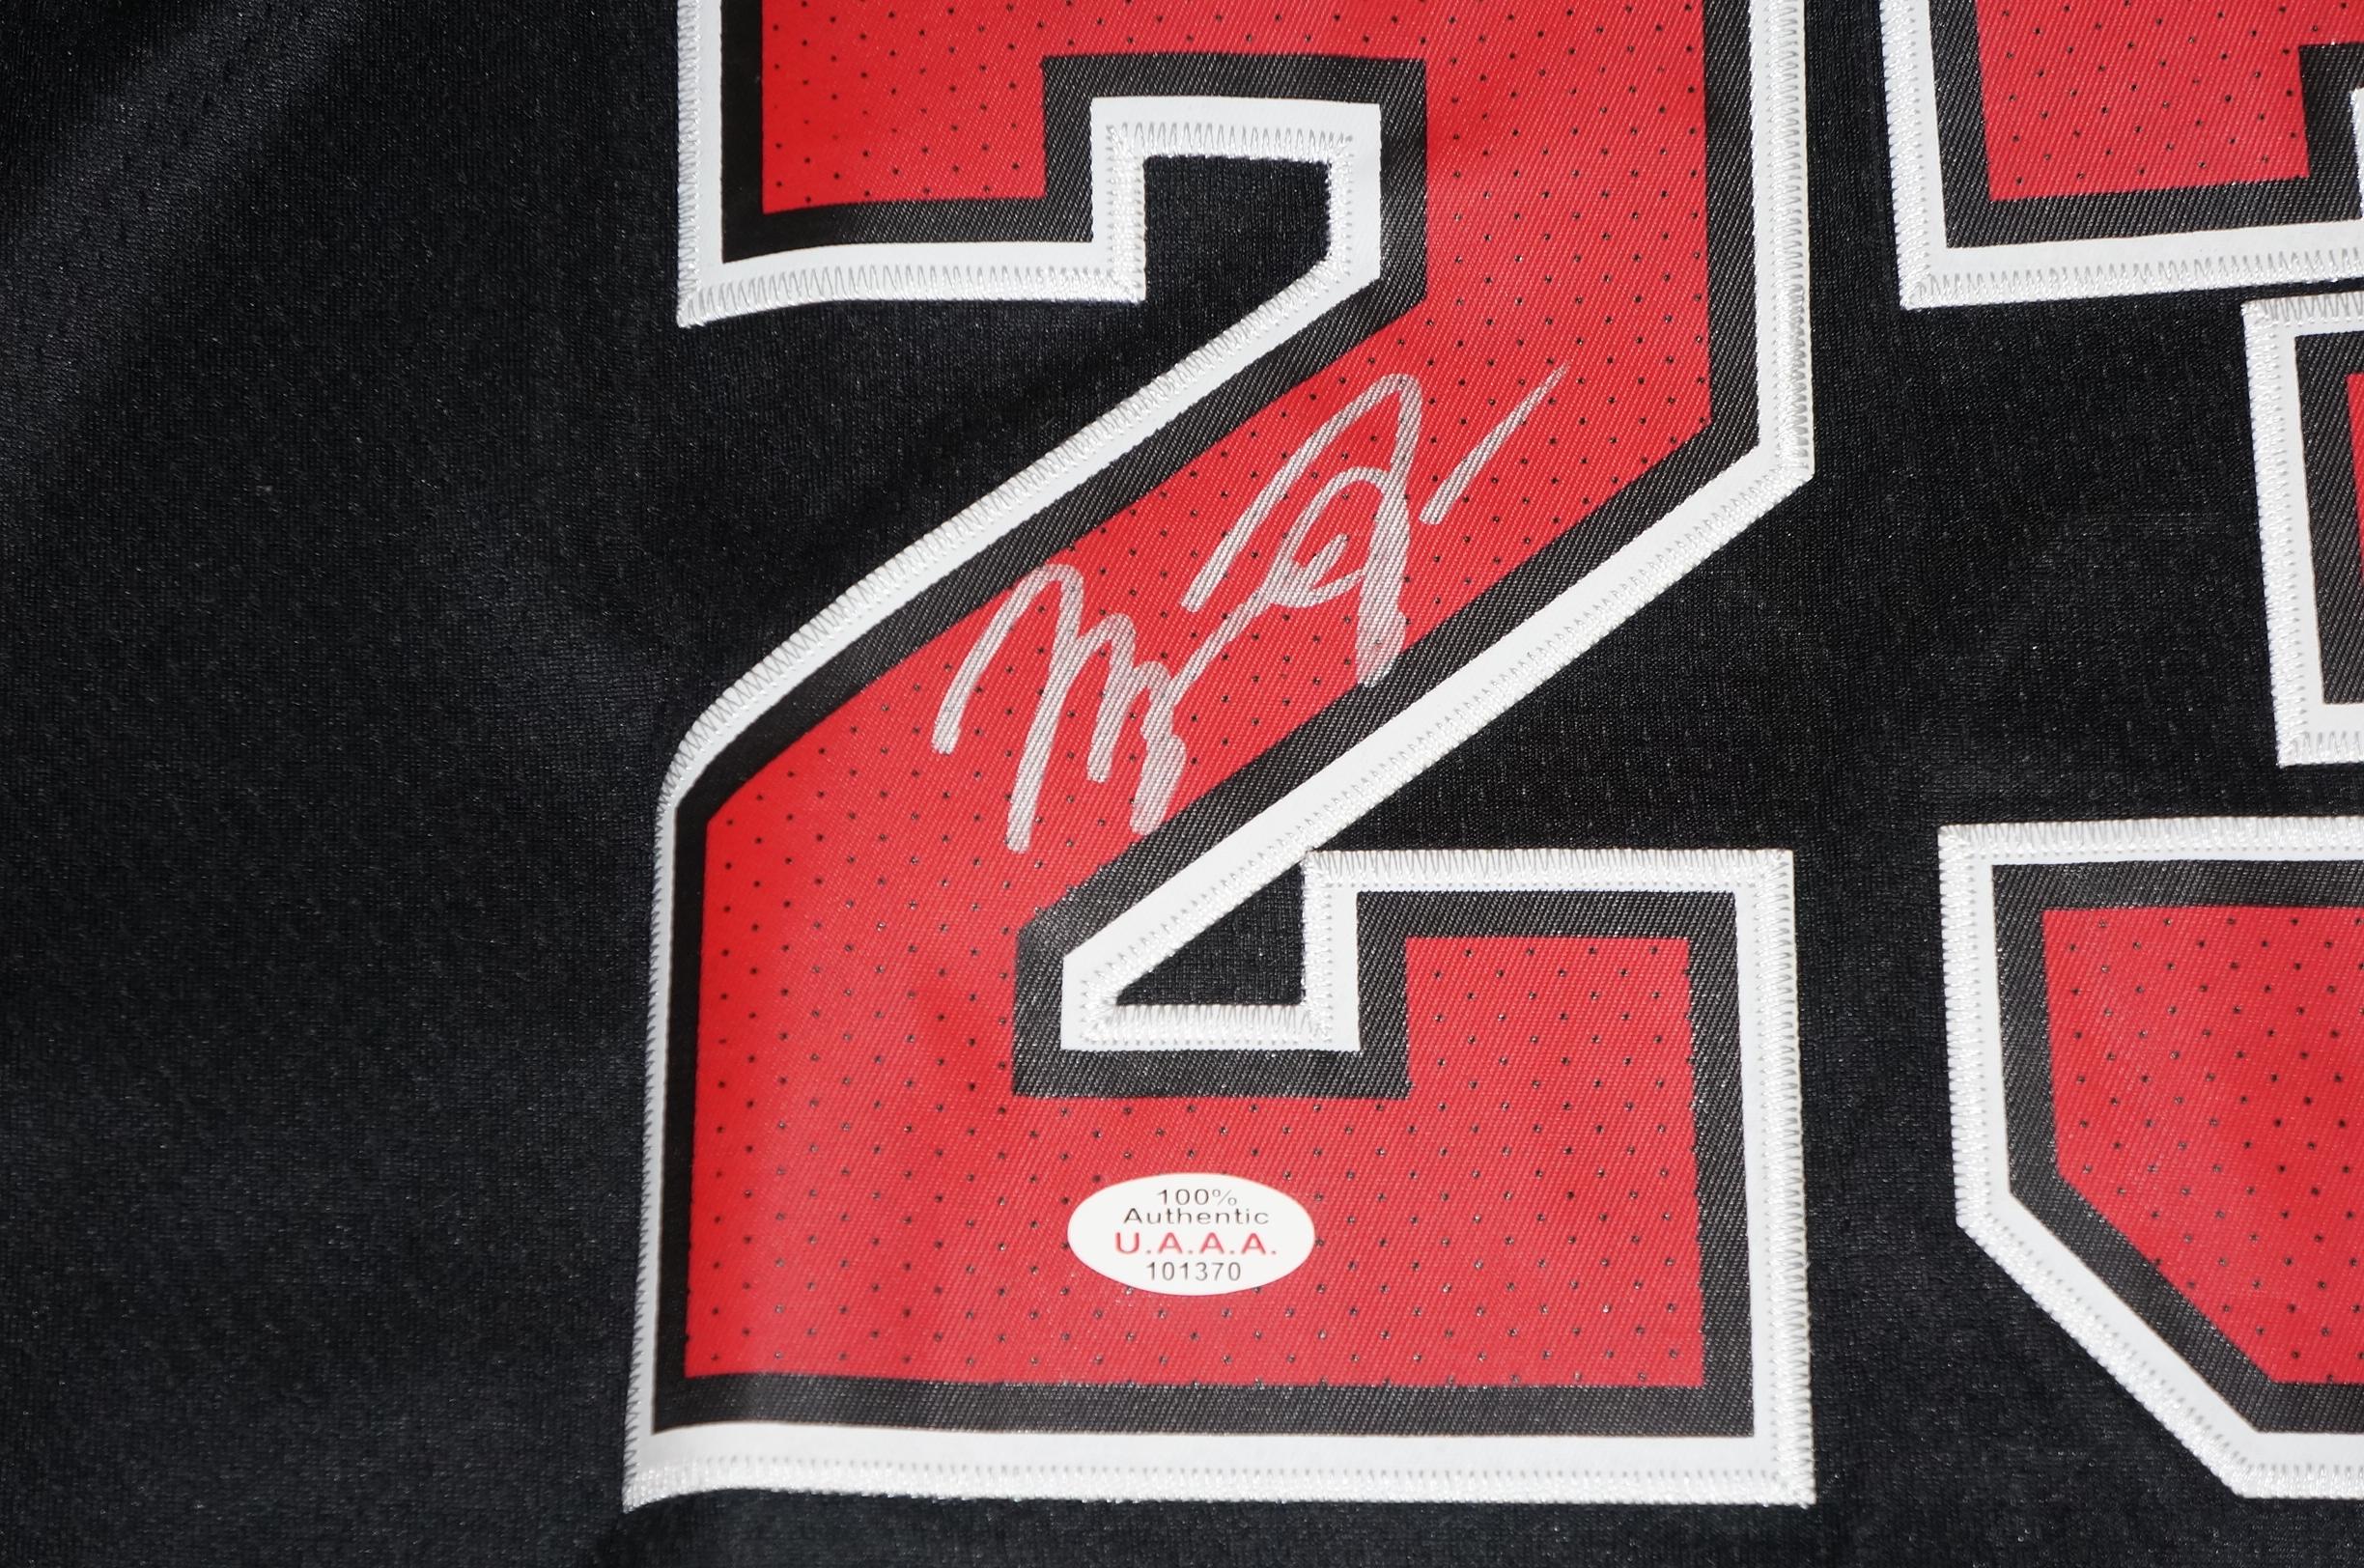 Michael Jordan - NBA Hall of Fame - Signed Chicago Bulls Jersey.